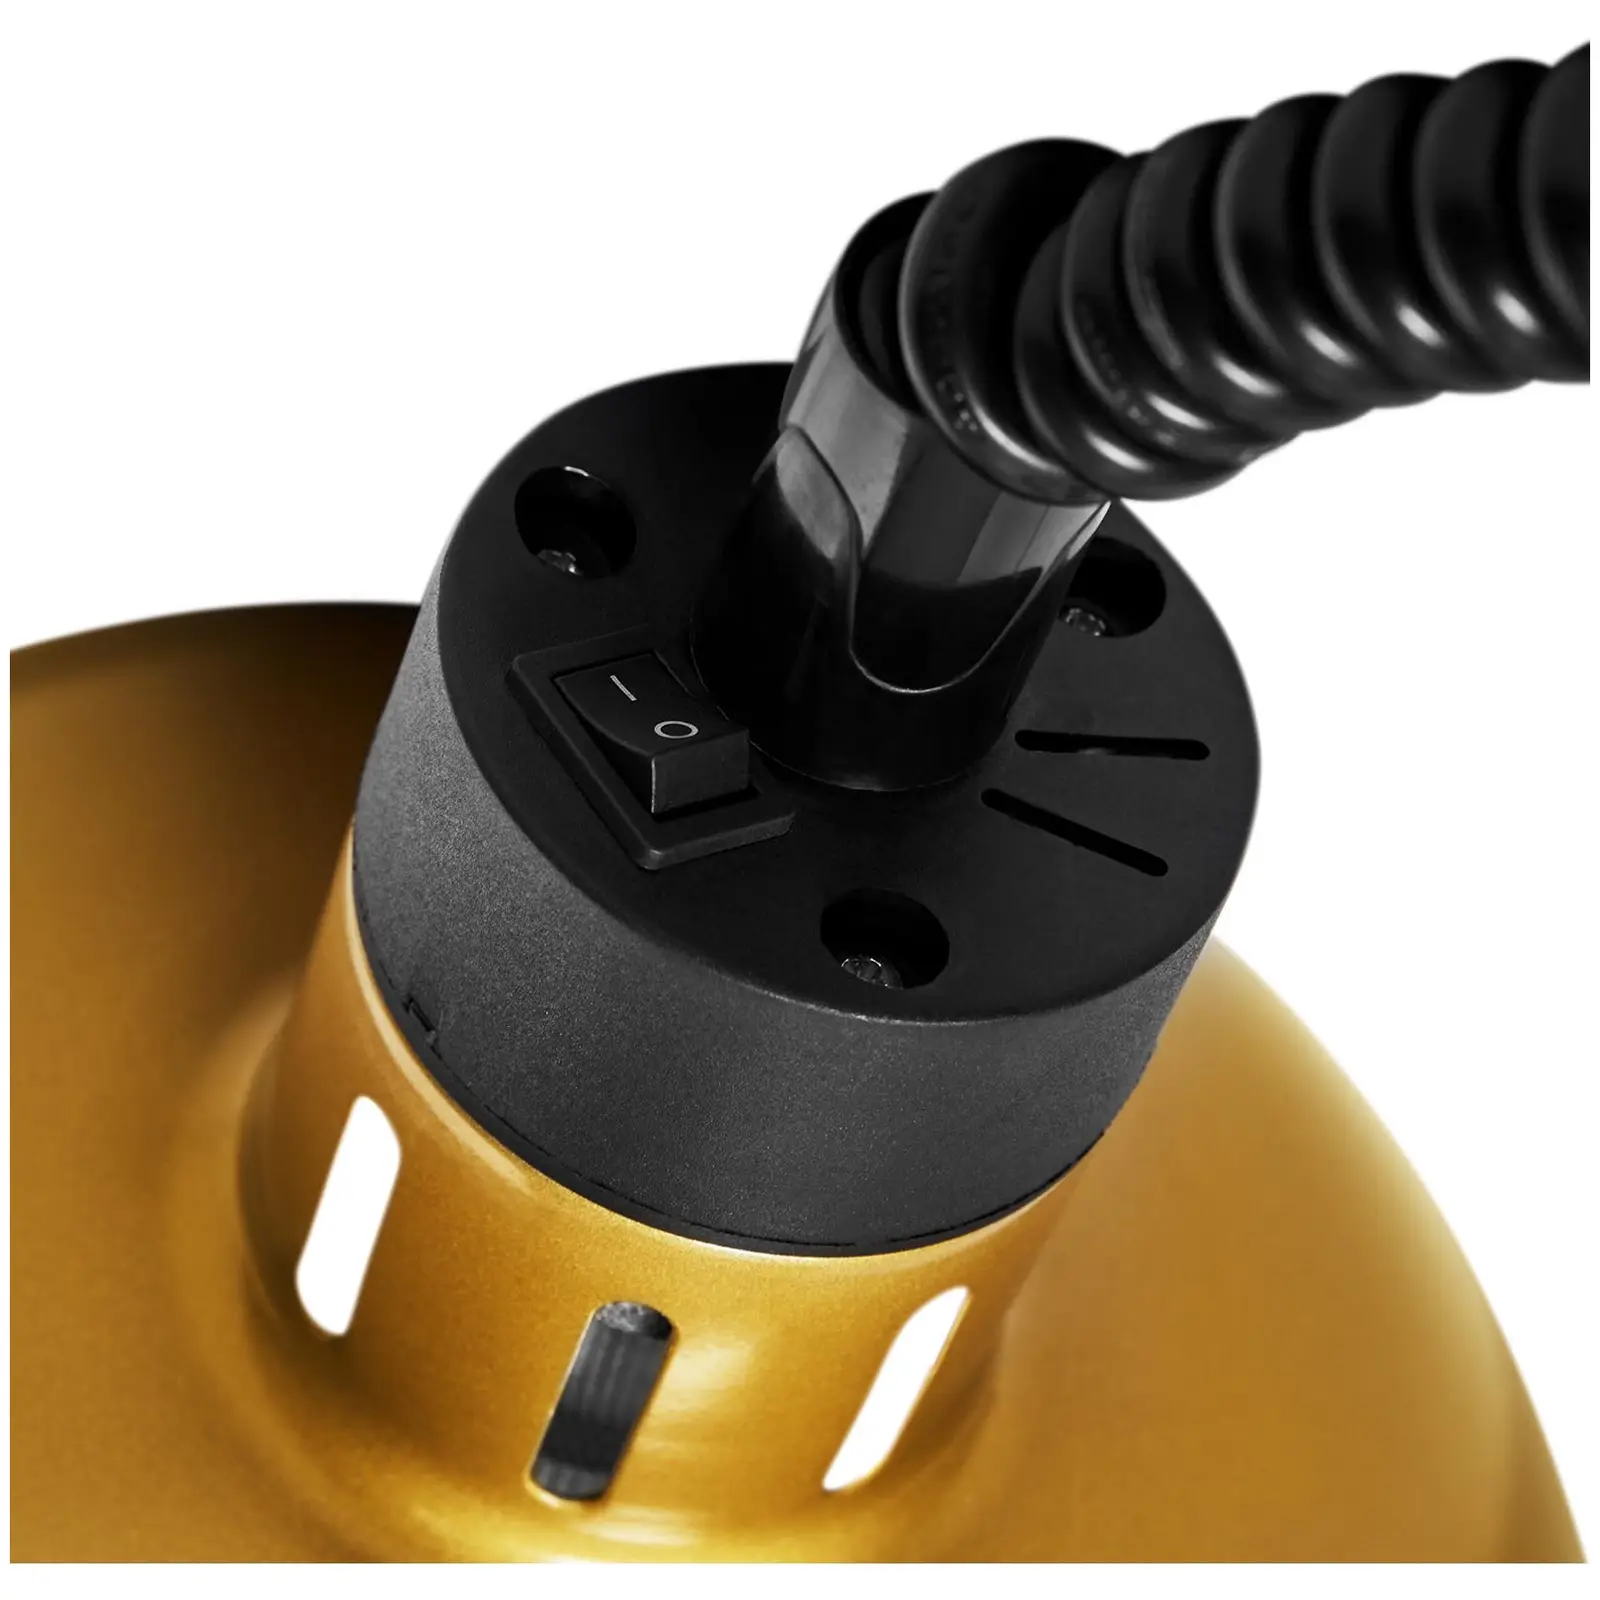 Lámpara calentadora de alimentos - dorada - 29 x 29 x 29.5 cm - Royal Catering - acero - regulable en altura